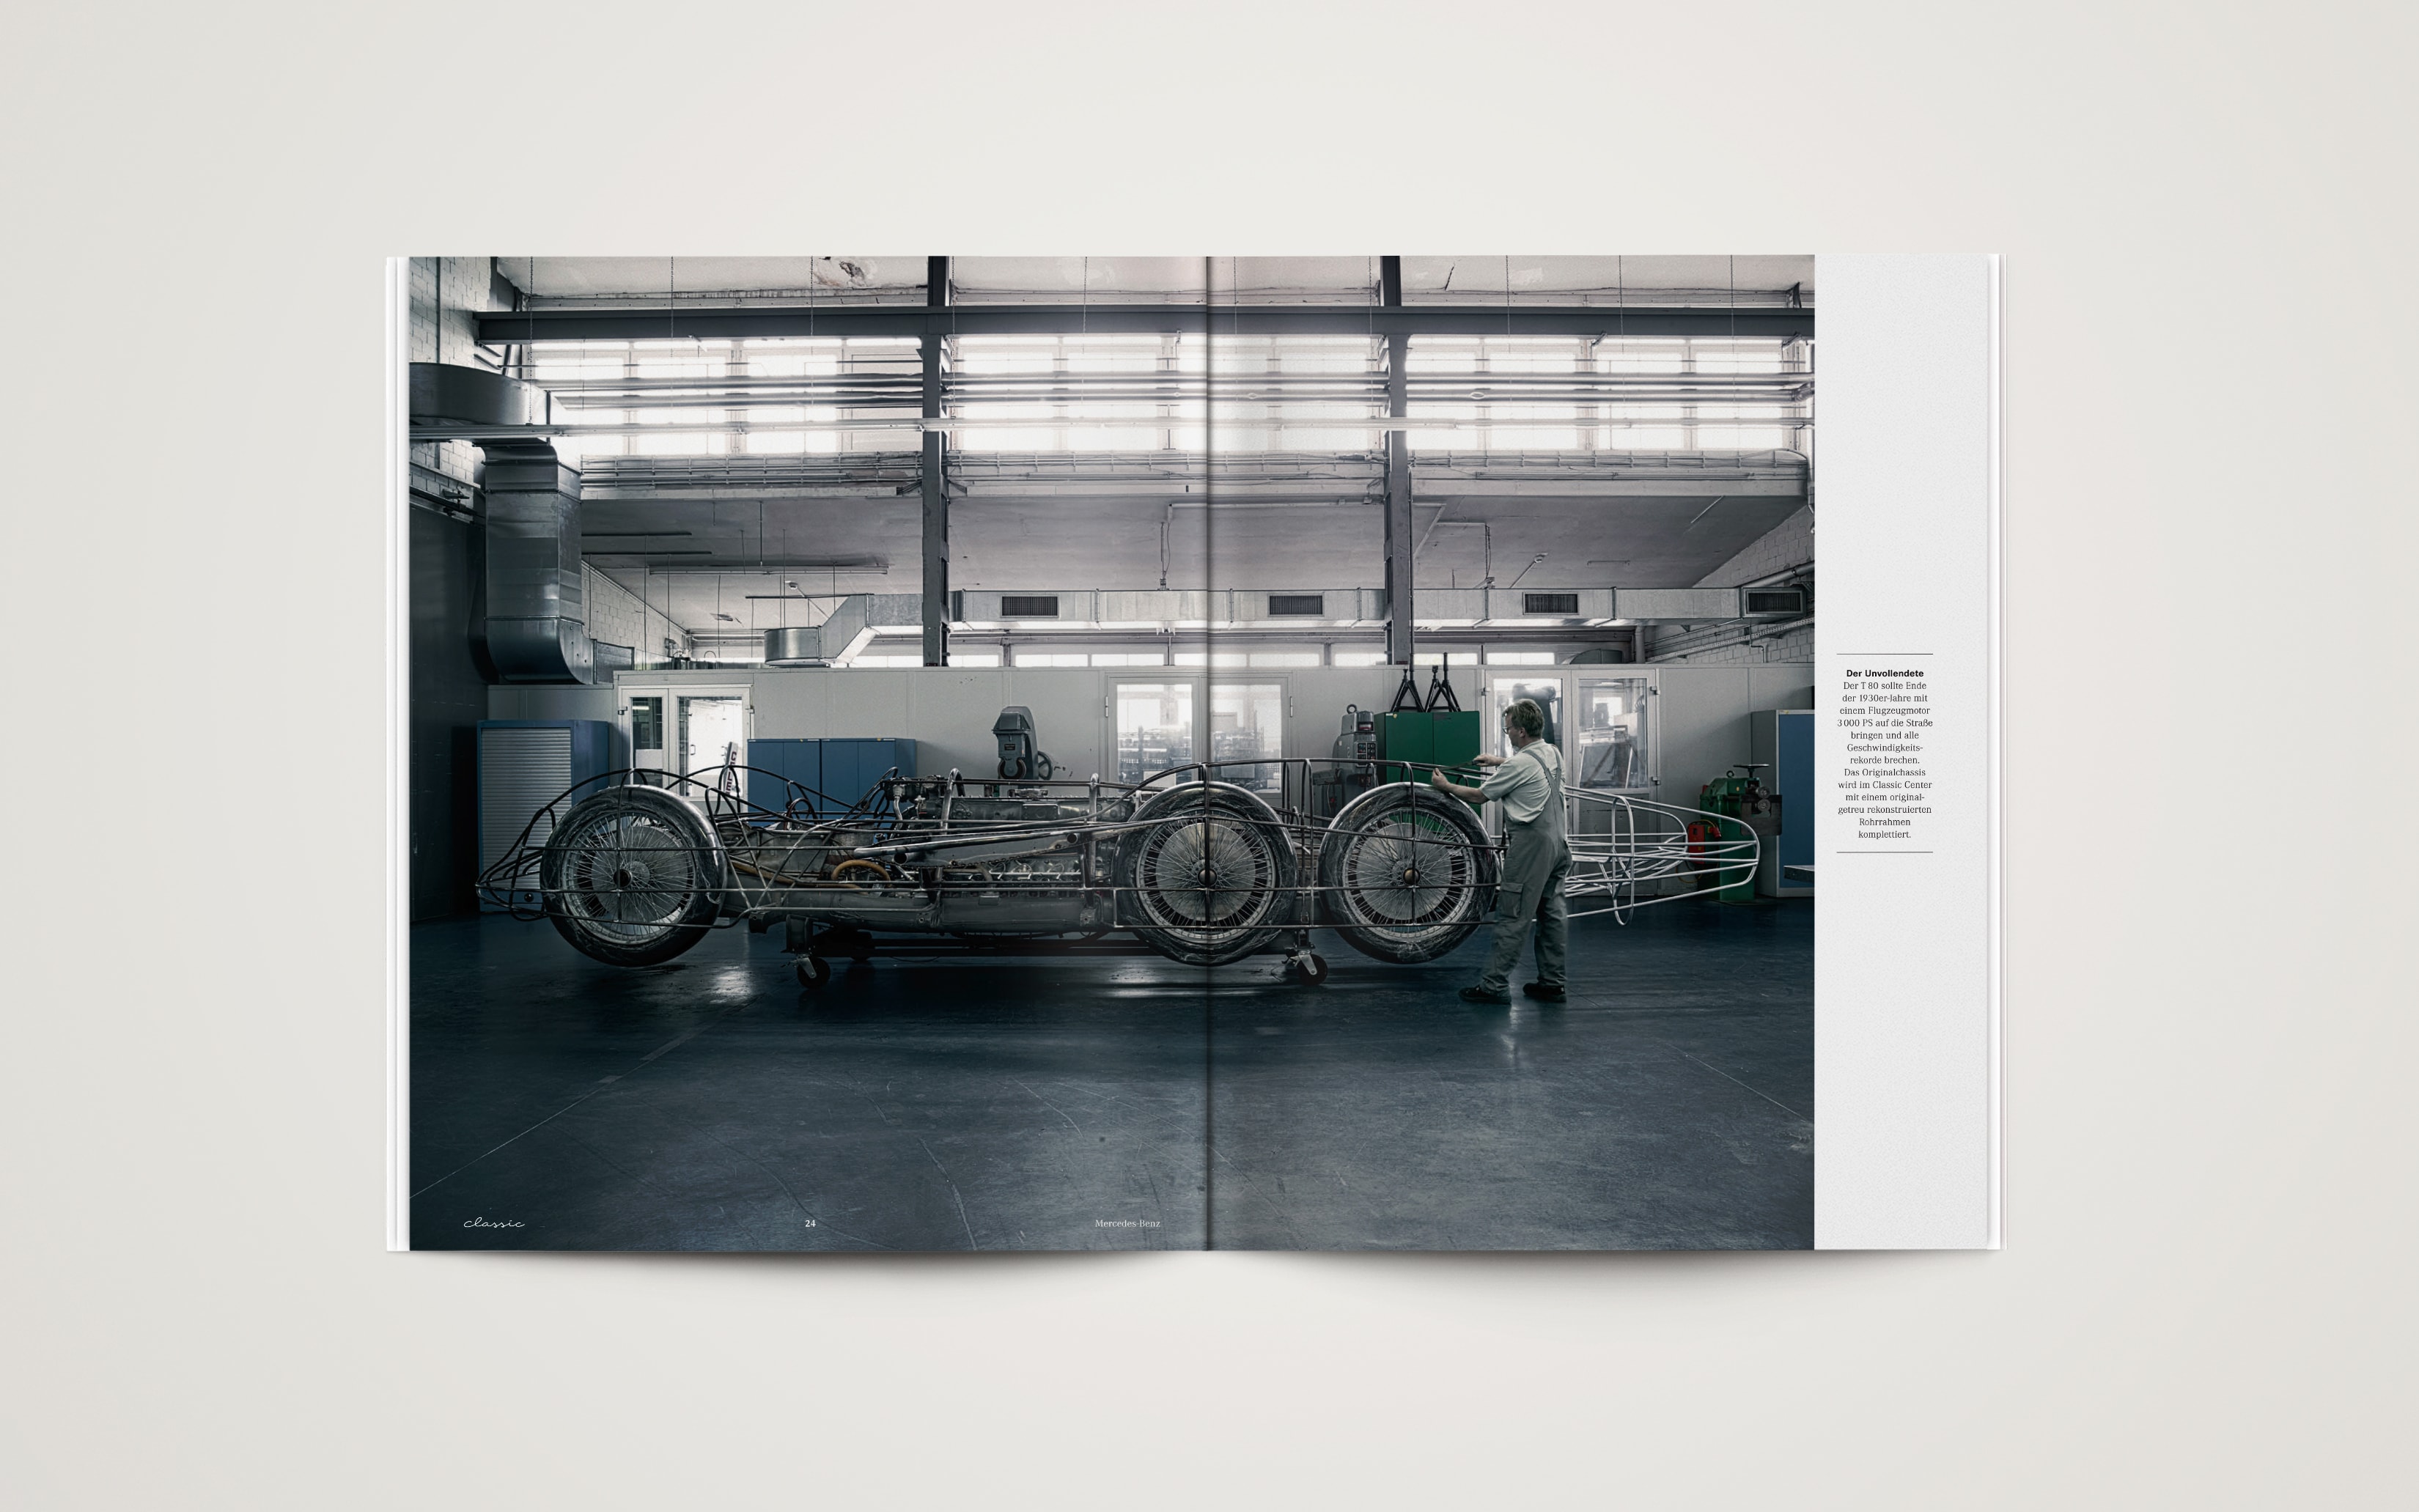 Bureau Johannes Erler – Mercedes-Benz Classic